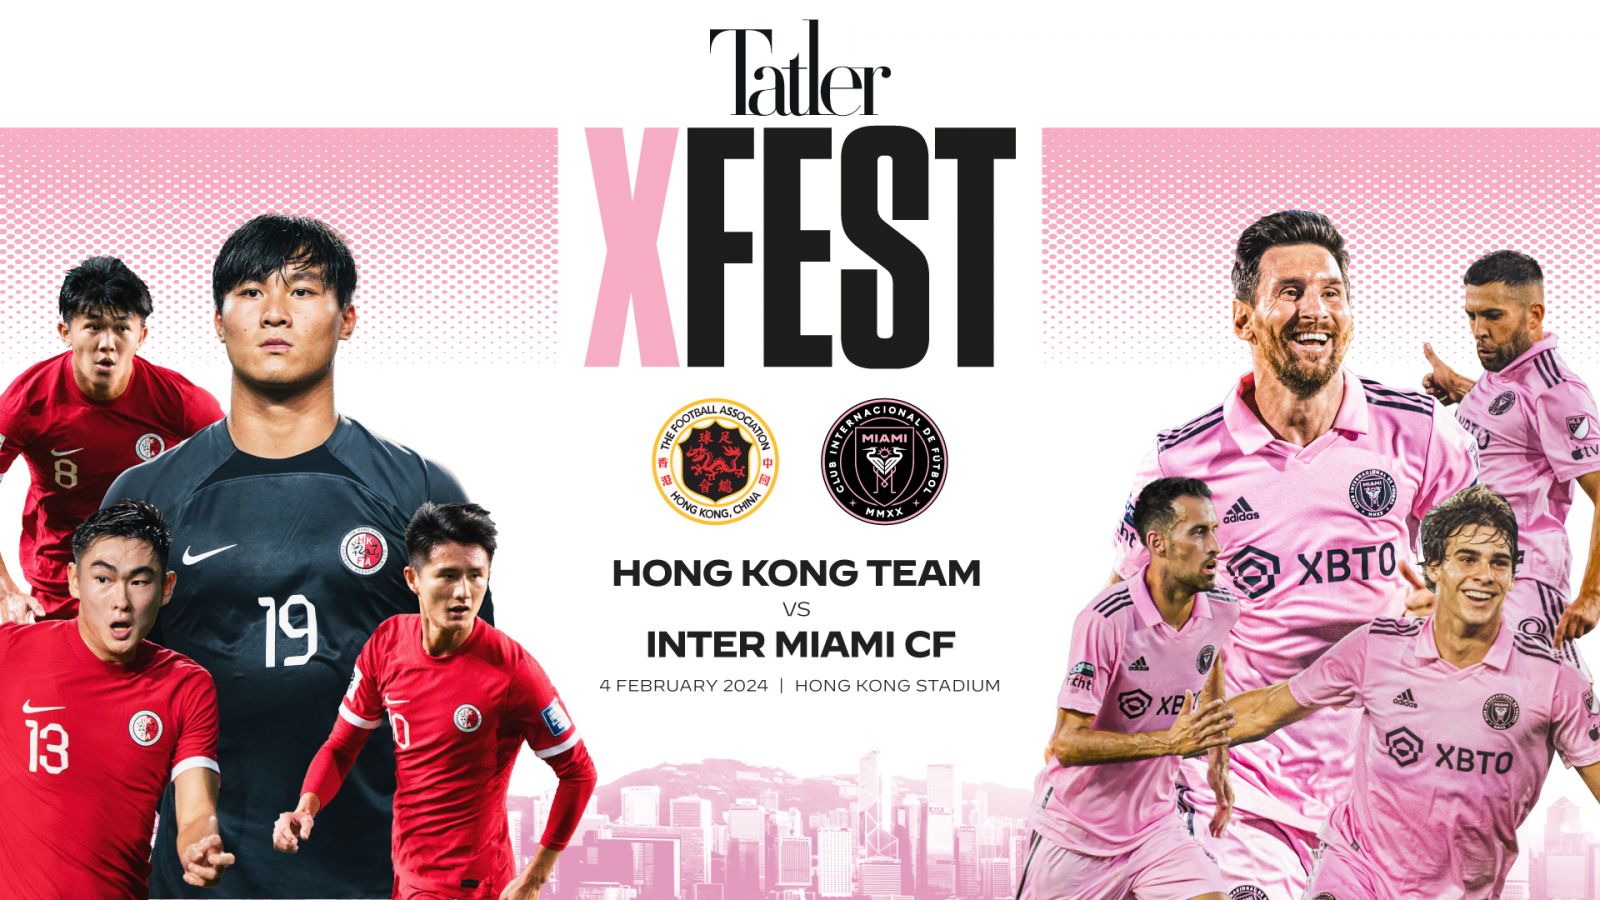 Tatler partners with David Beckham and Inter Miami CF to bring Inter Miami  CF to Hong Kong for the inaugural Tatler XFEST.